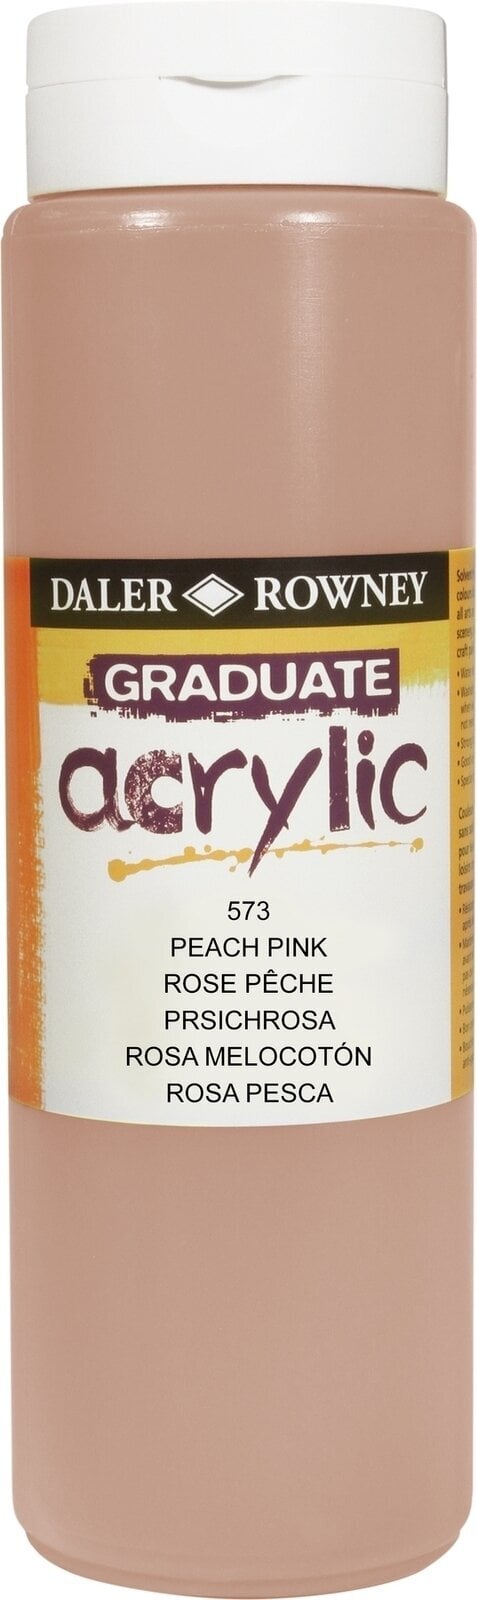 Akrylmaling Daler Rowney Graduate Akrylmaling Peach Pink 500 ml 1 stk.